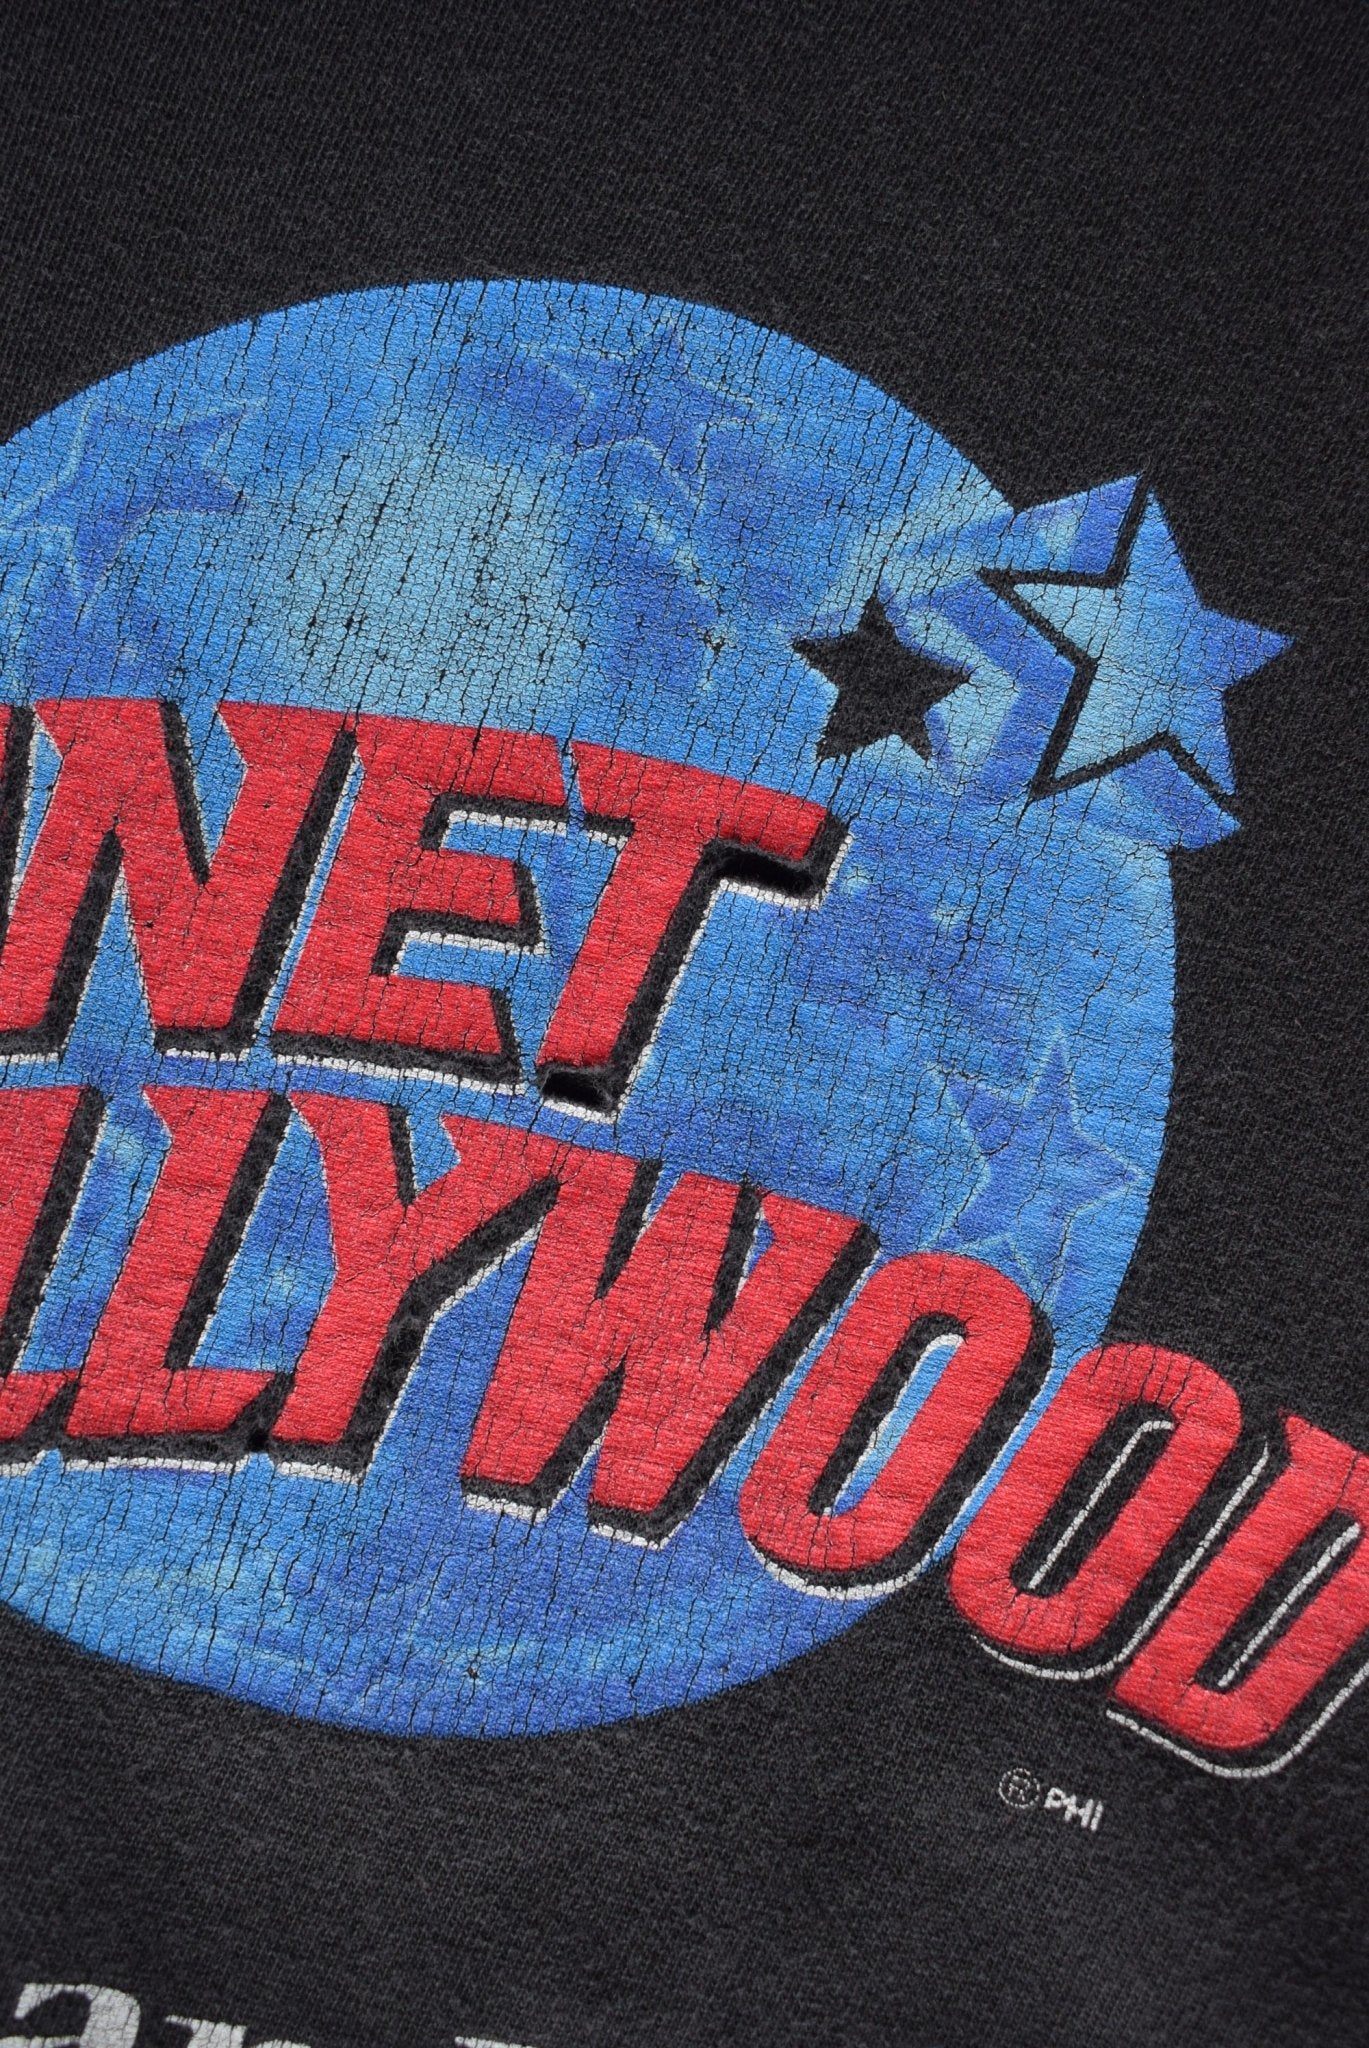 Vintage 90s Planet Hollywood Orlando Tee (L/XL) - Retrospective Store